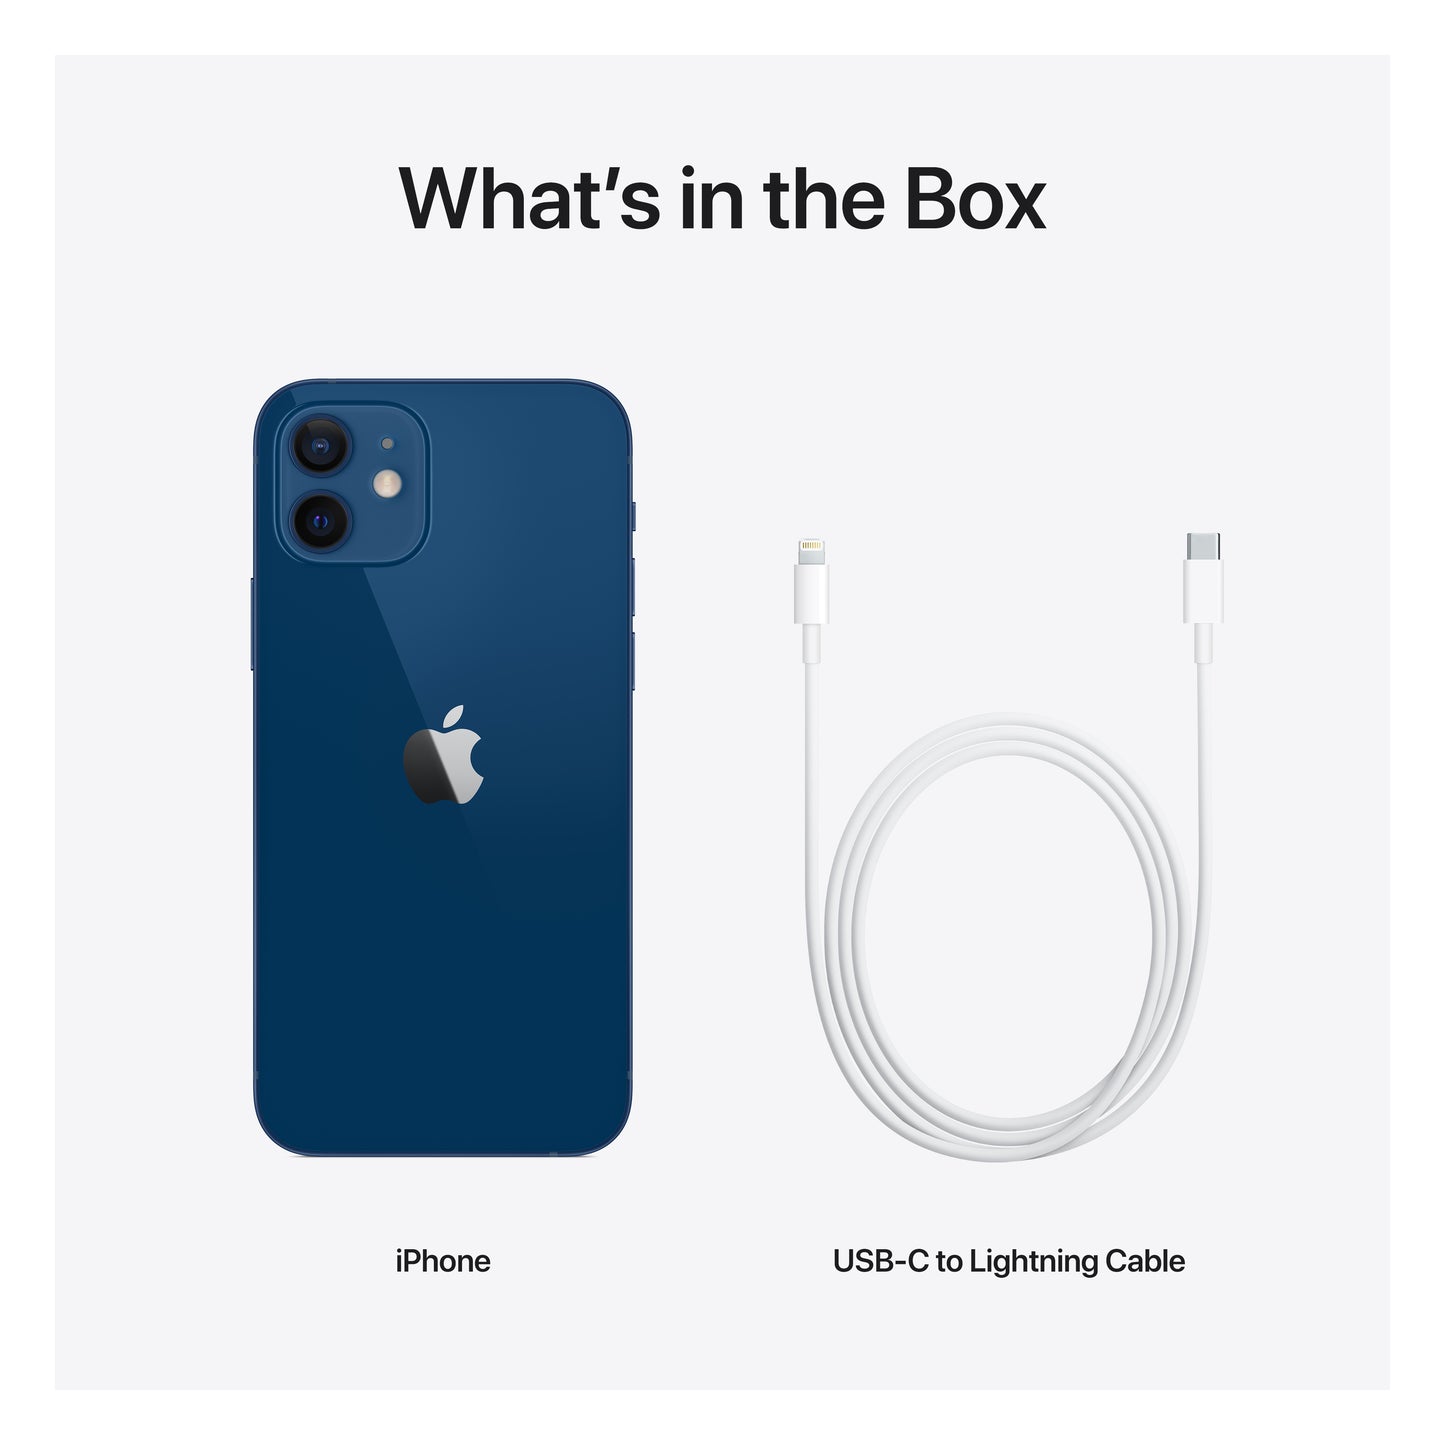 Apple iPhone 12 | Blue